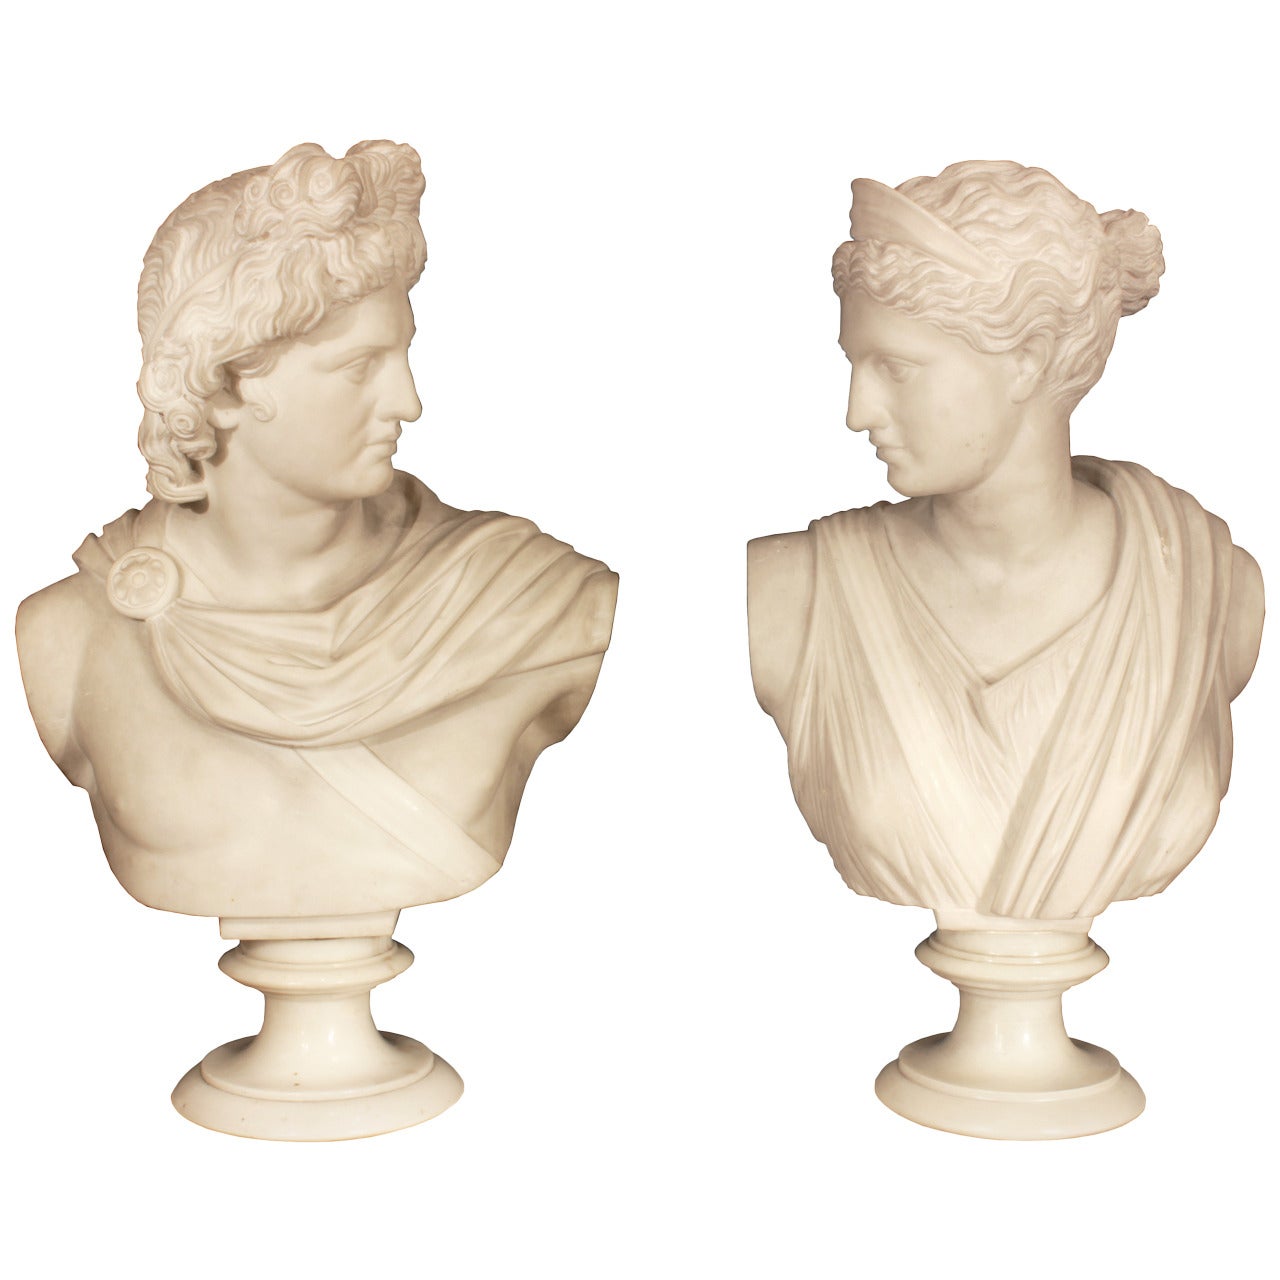 Pair of Italian 19th Century White Carrara Marble Busts of Apollo and Diana